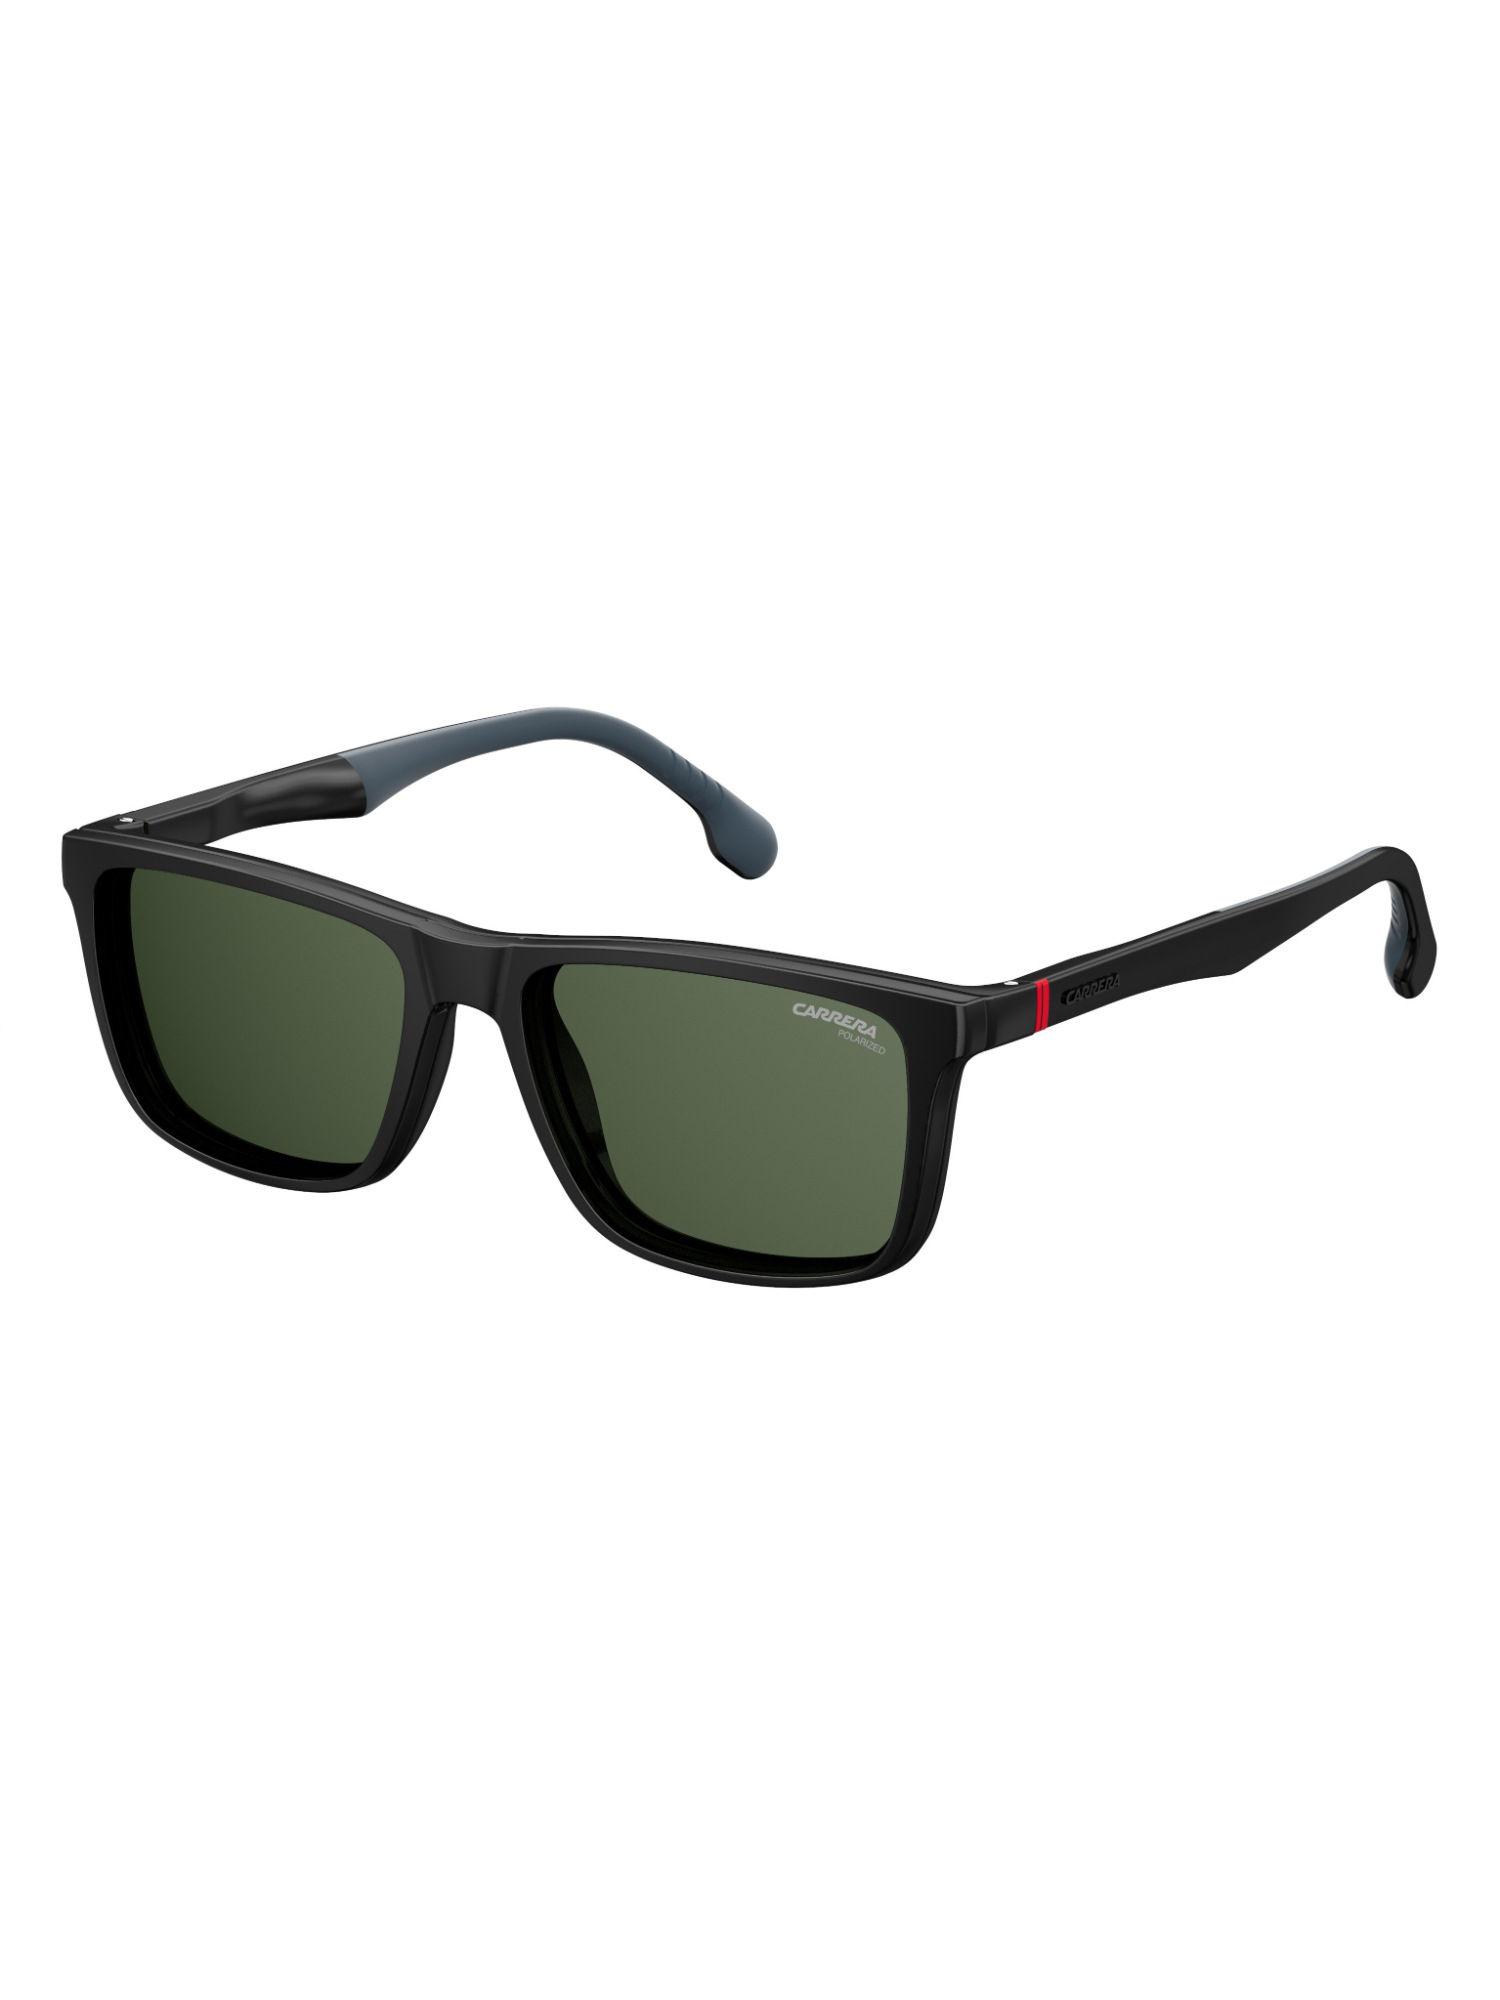 sunglasses green polarized lens rectangular sunglass black frame